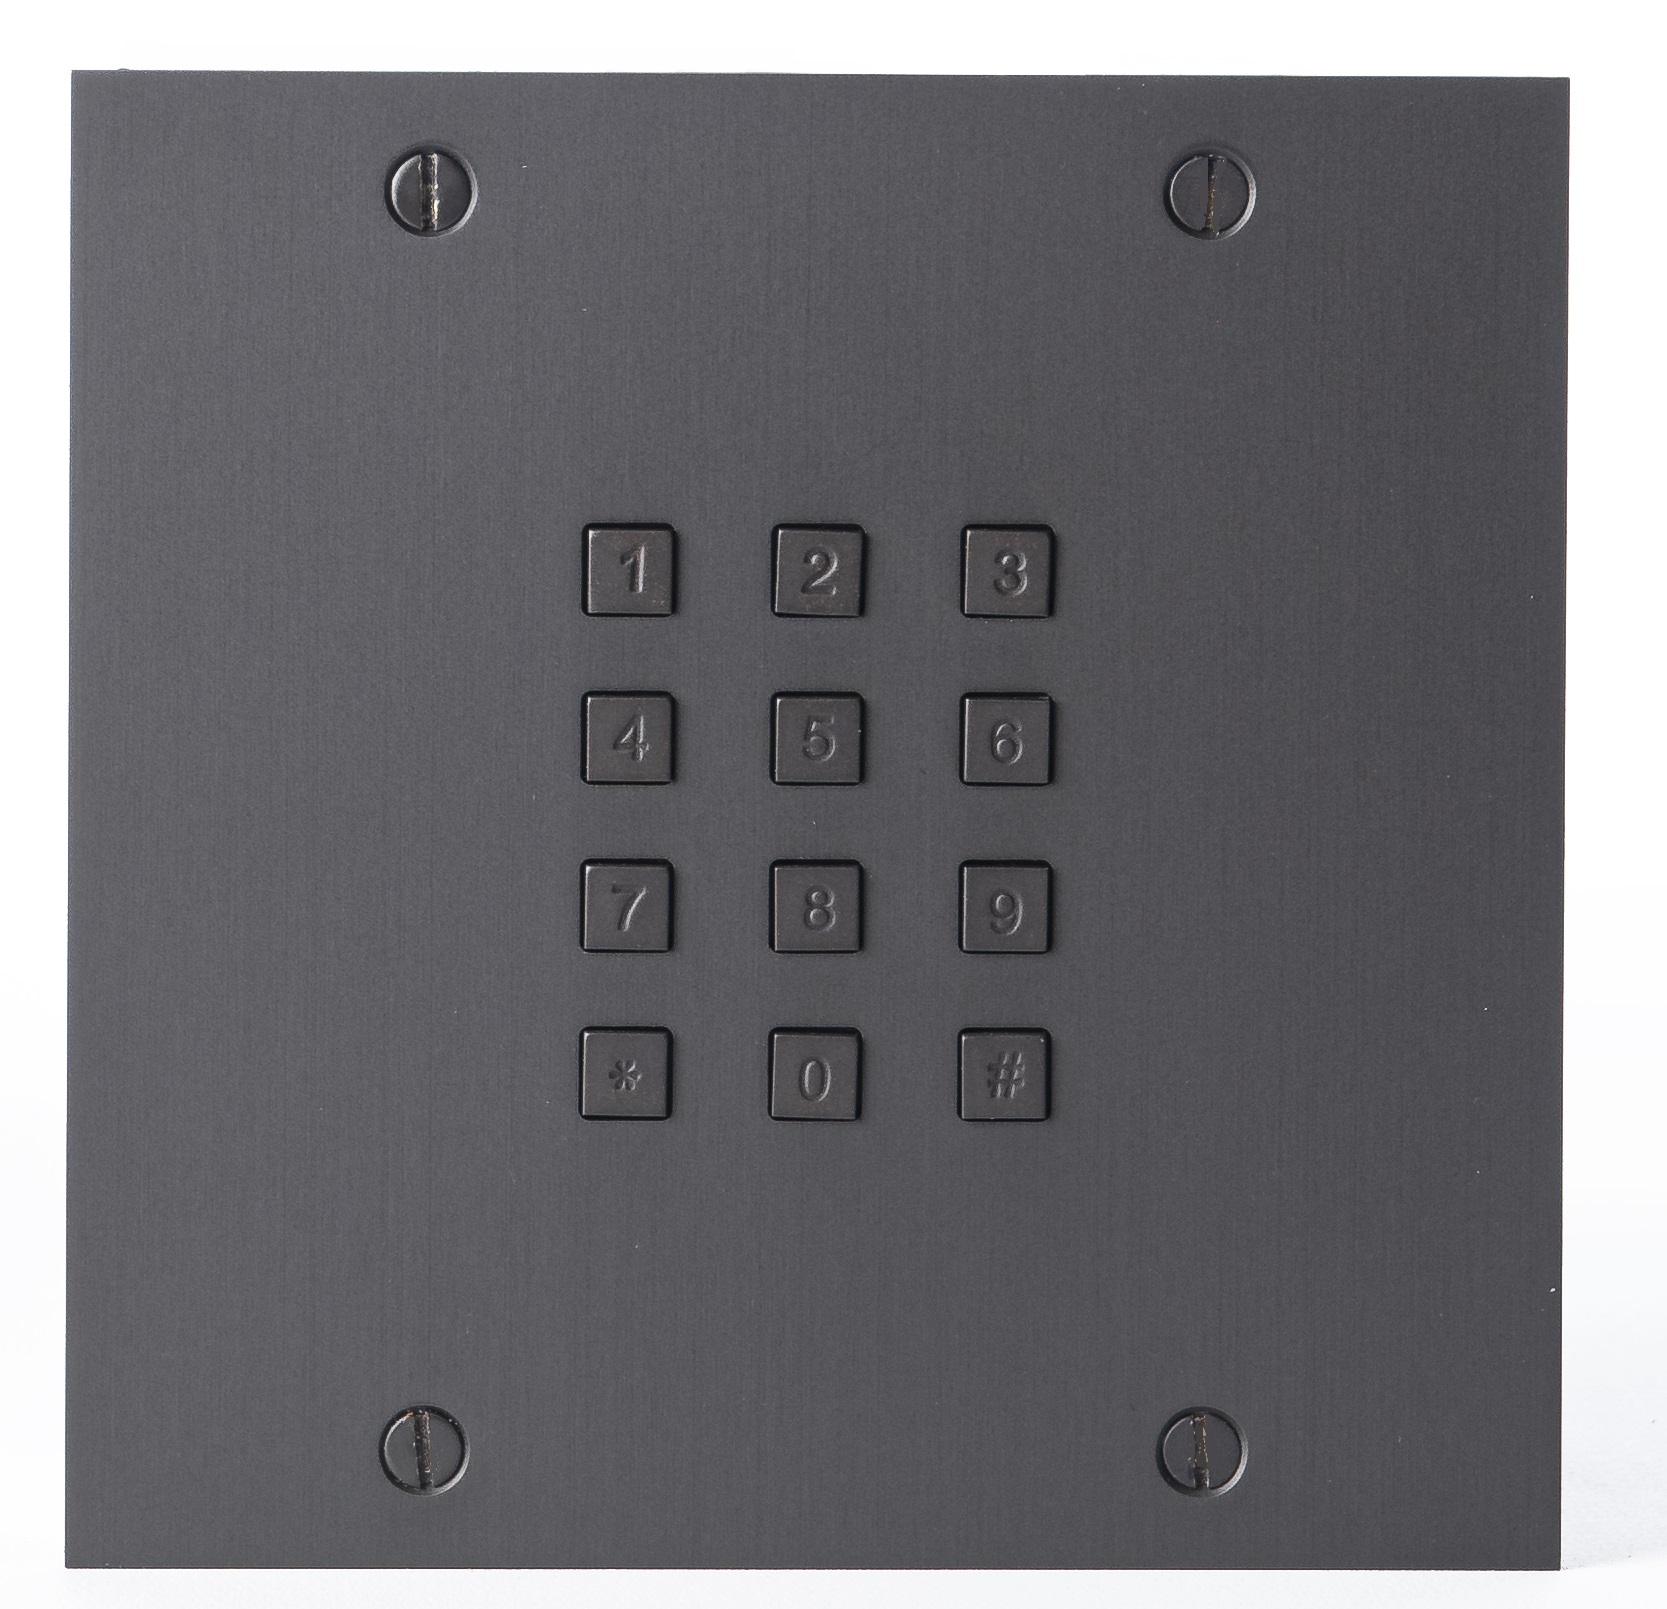 FT24K keypad of codeklavier in bronze matt